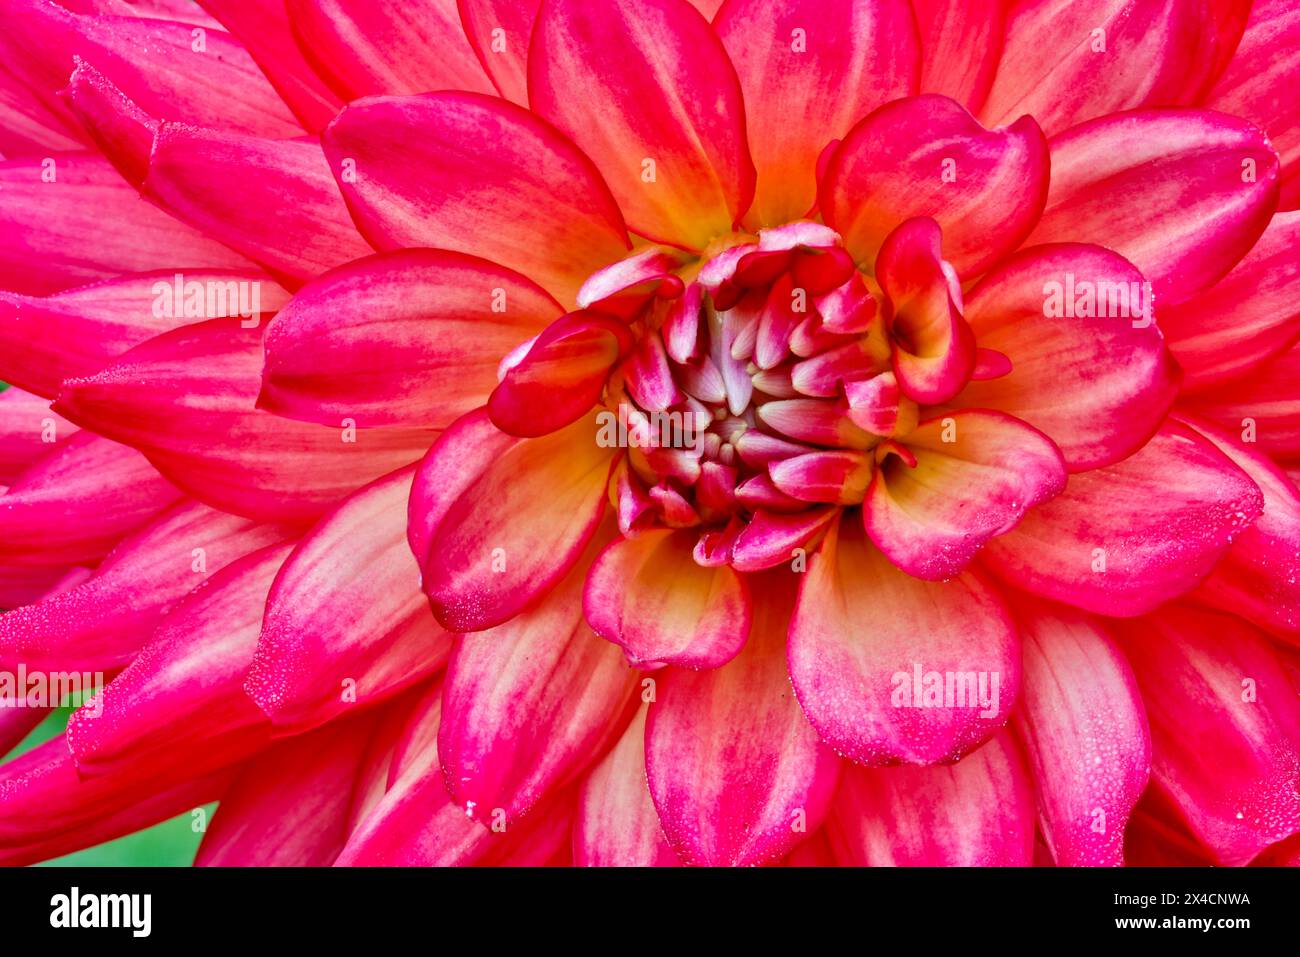 USA, Washington State, Sammamish. Close-up flowering dahlia Stock Photo